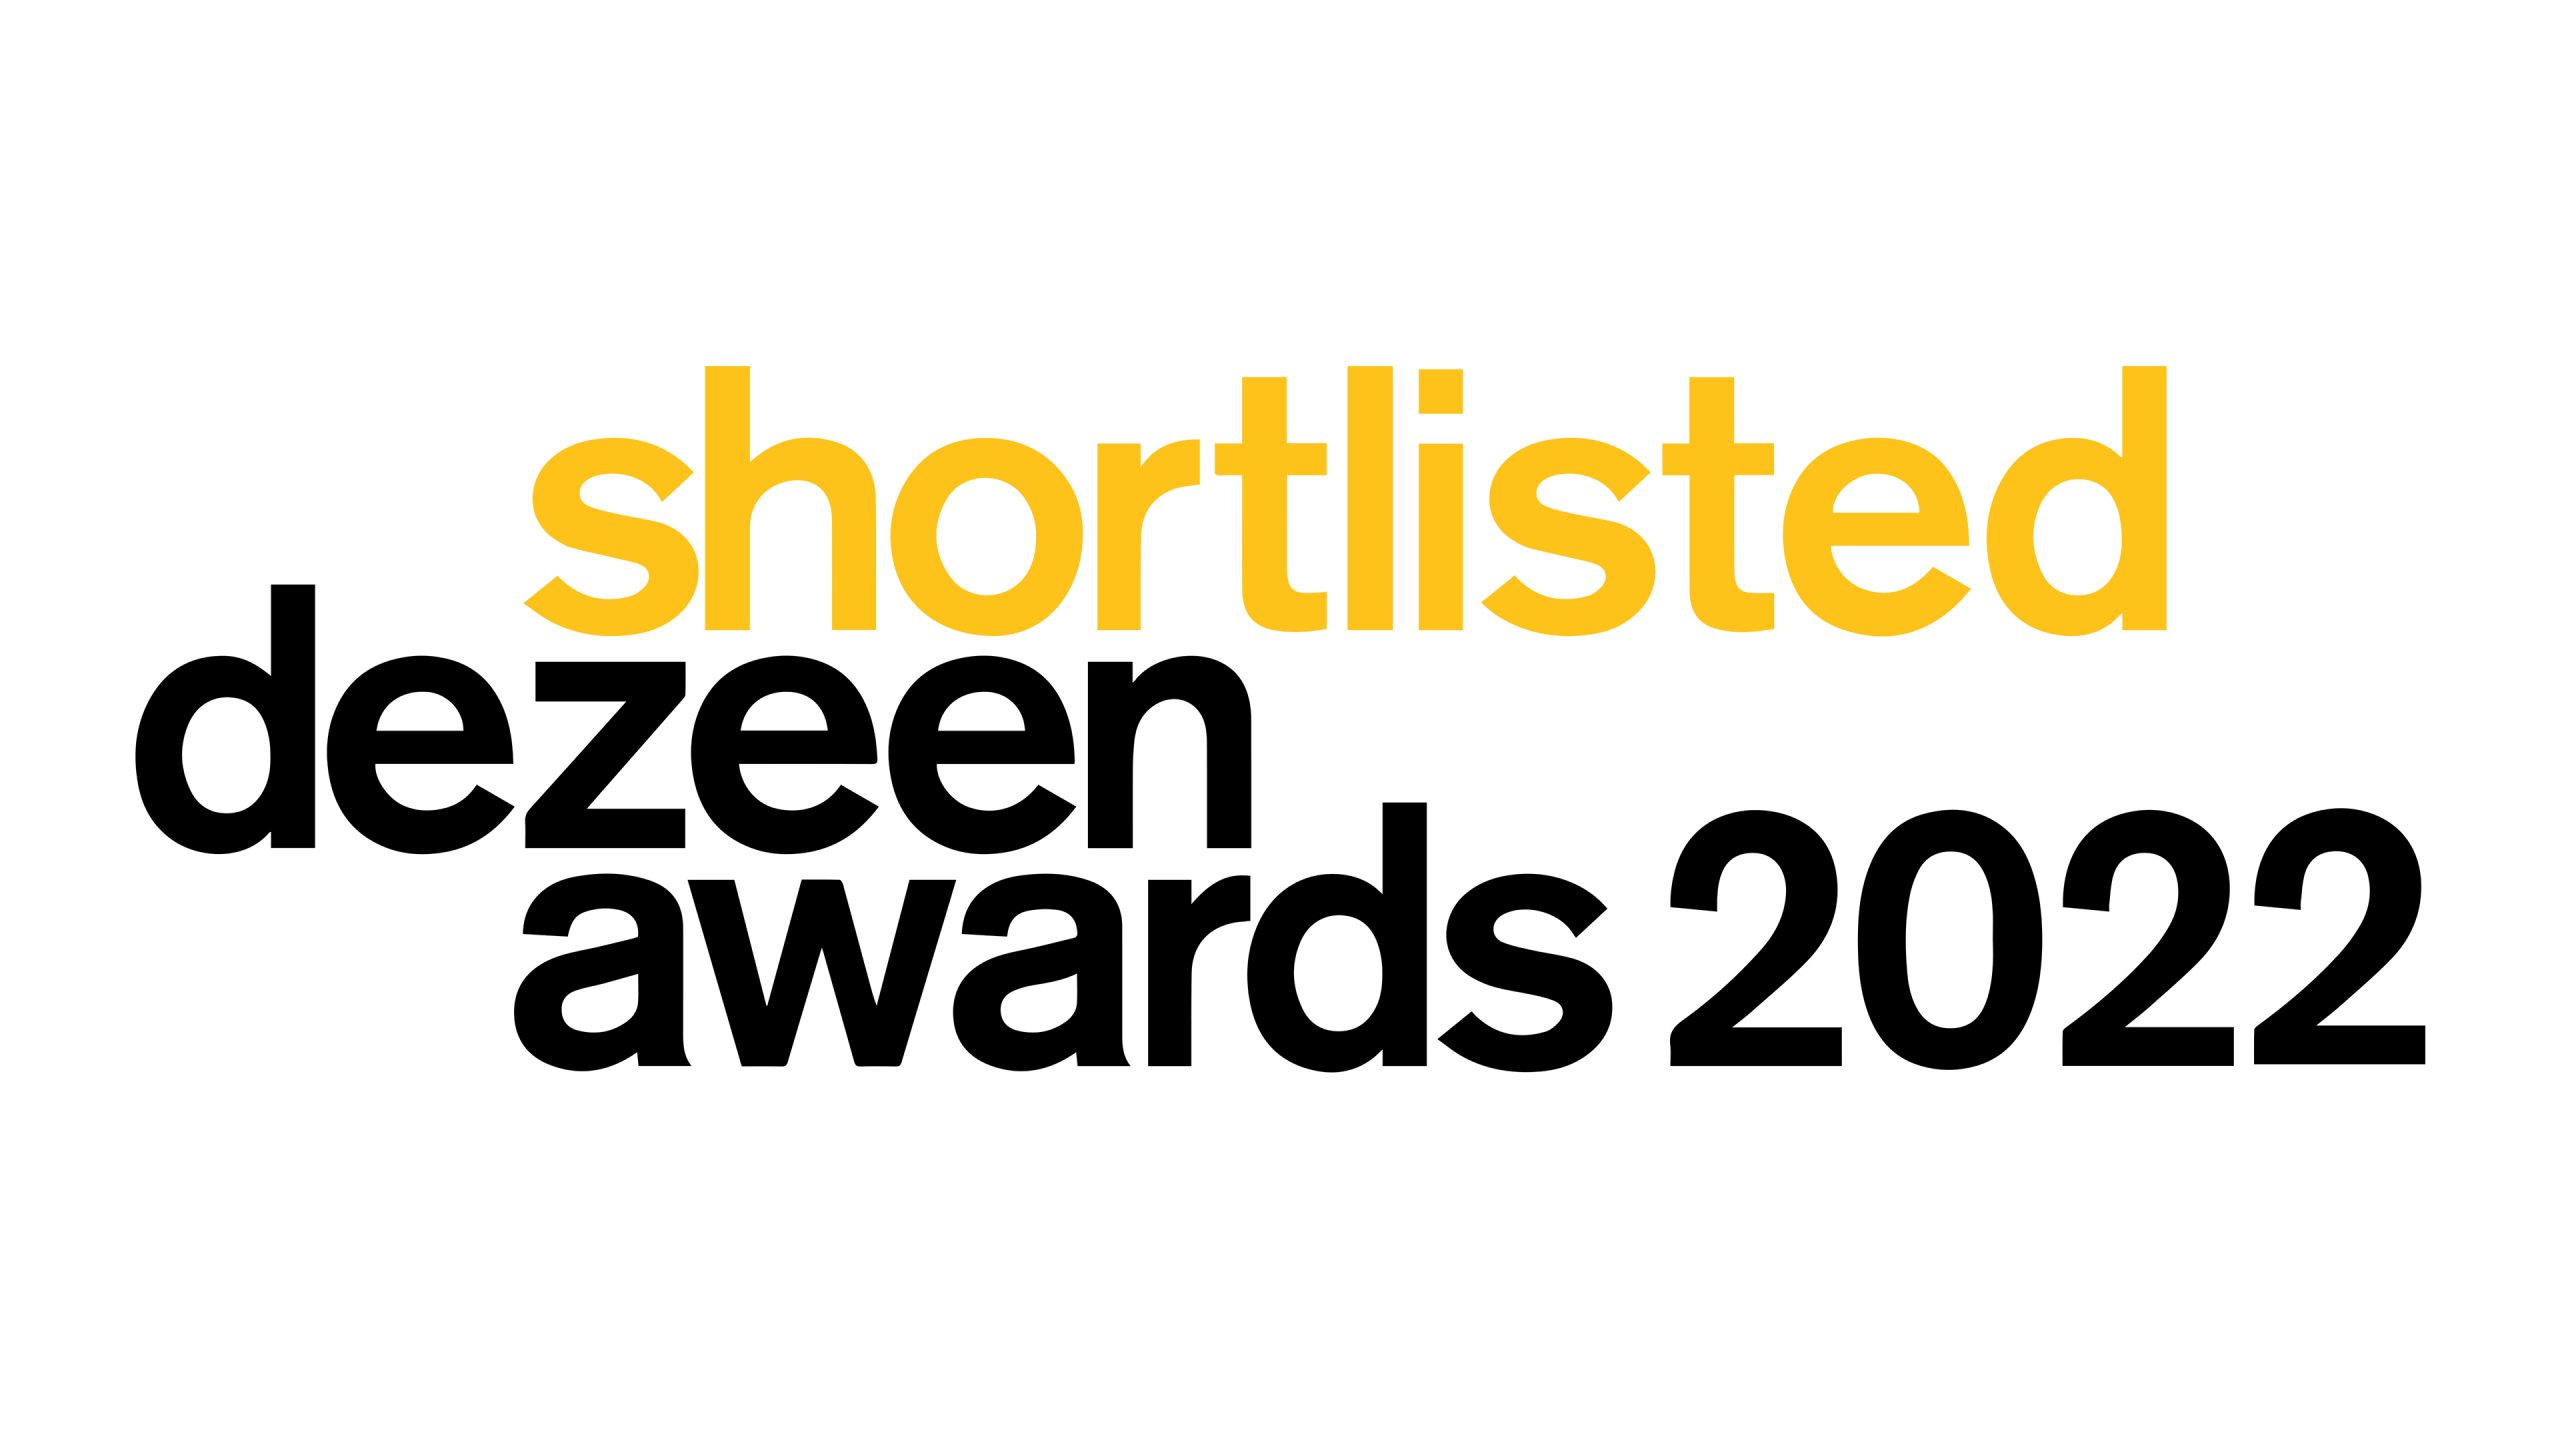 Dezeen Awards 2022: шорт-лист финалистов